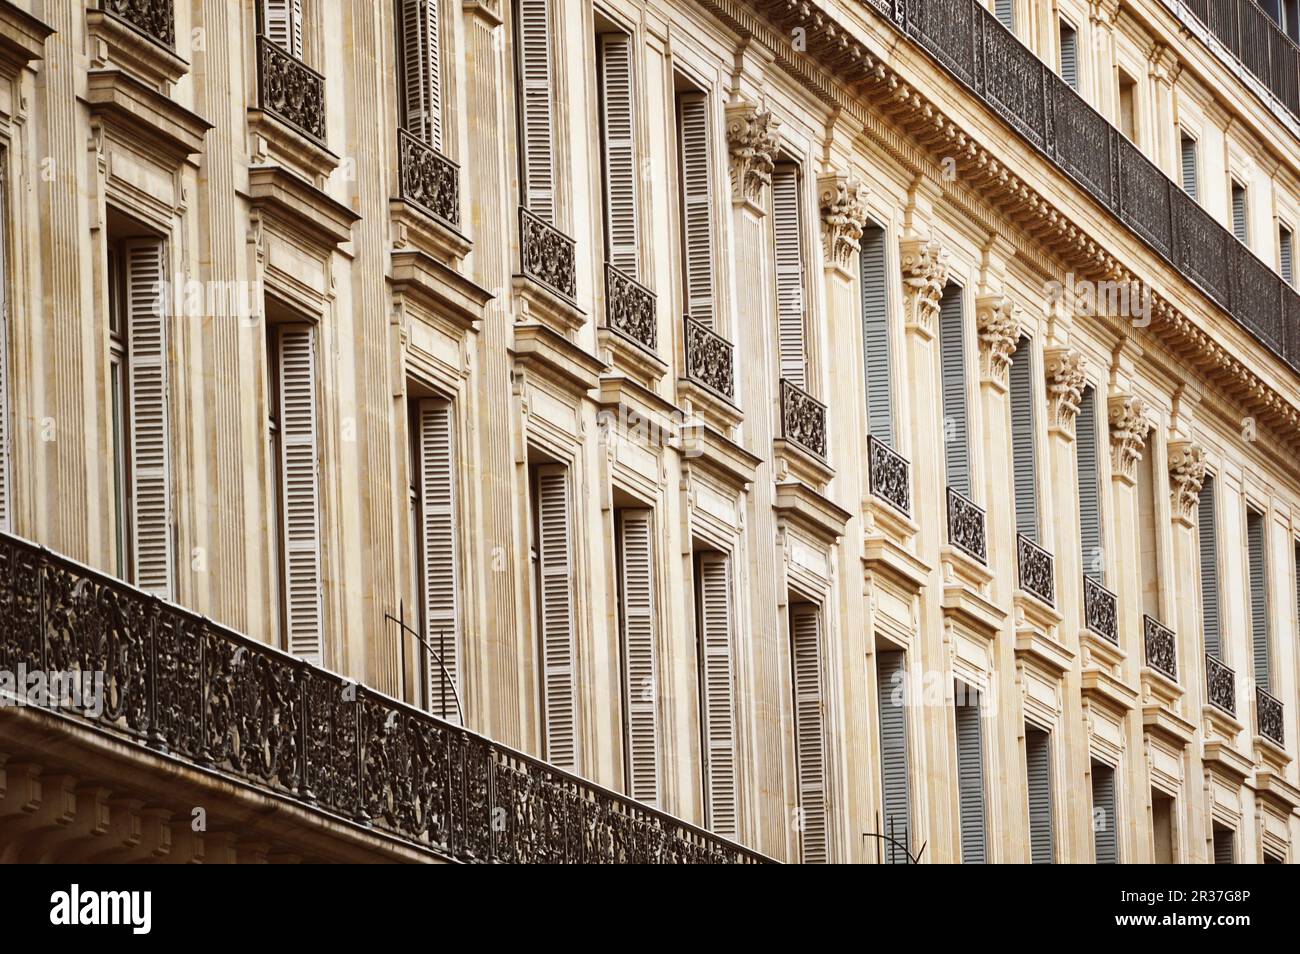 Original historic Parisian architecture Stock Photo - Alamy